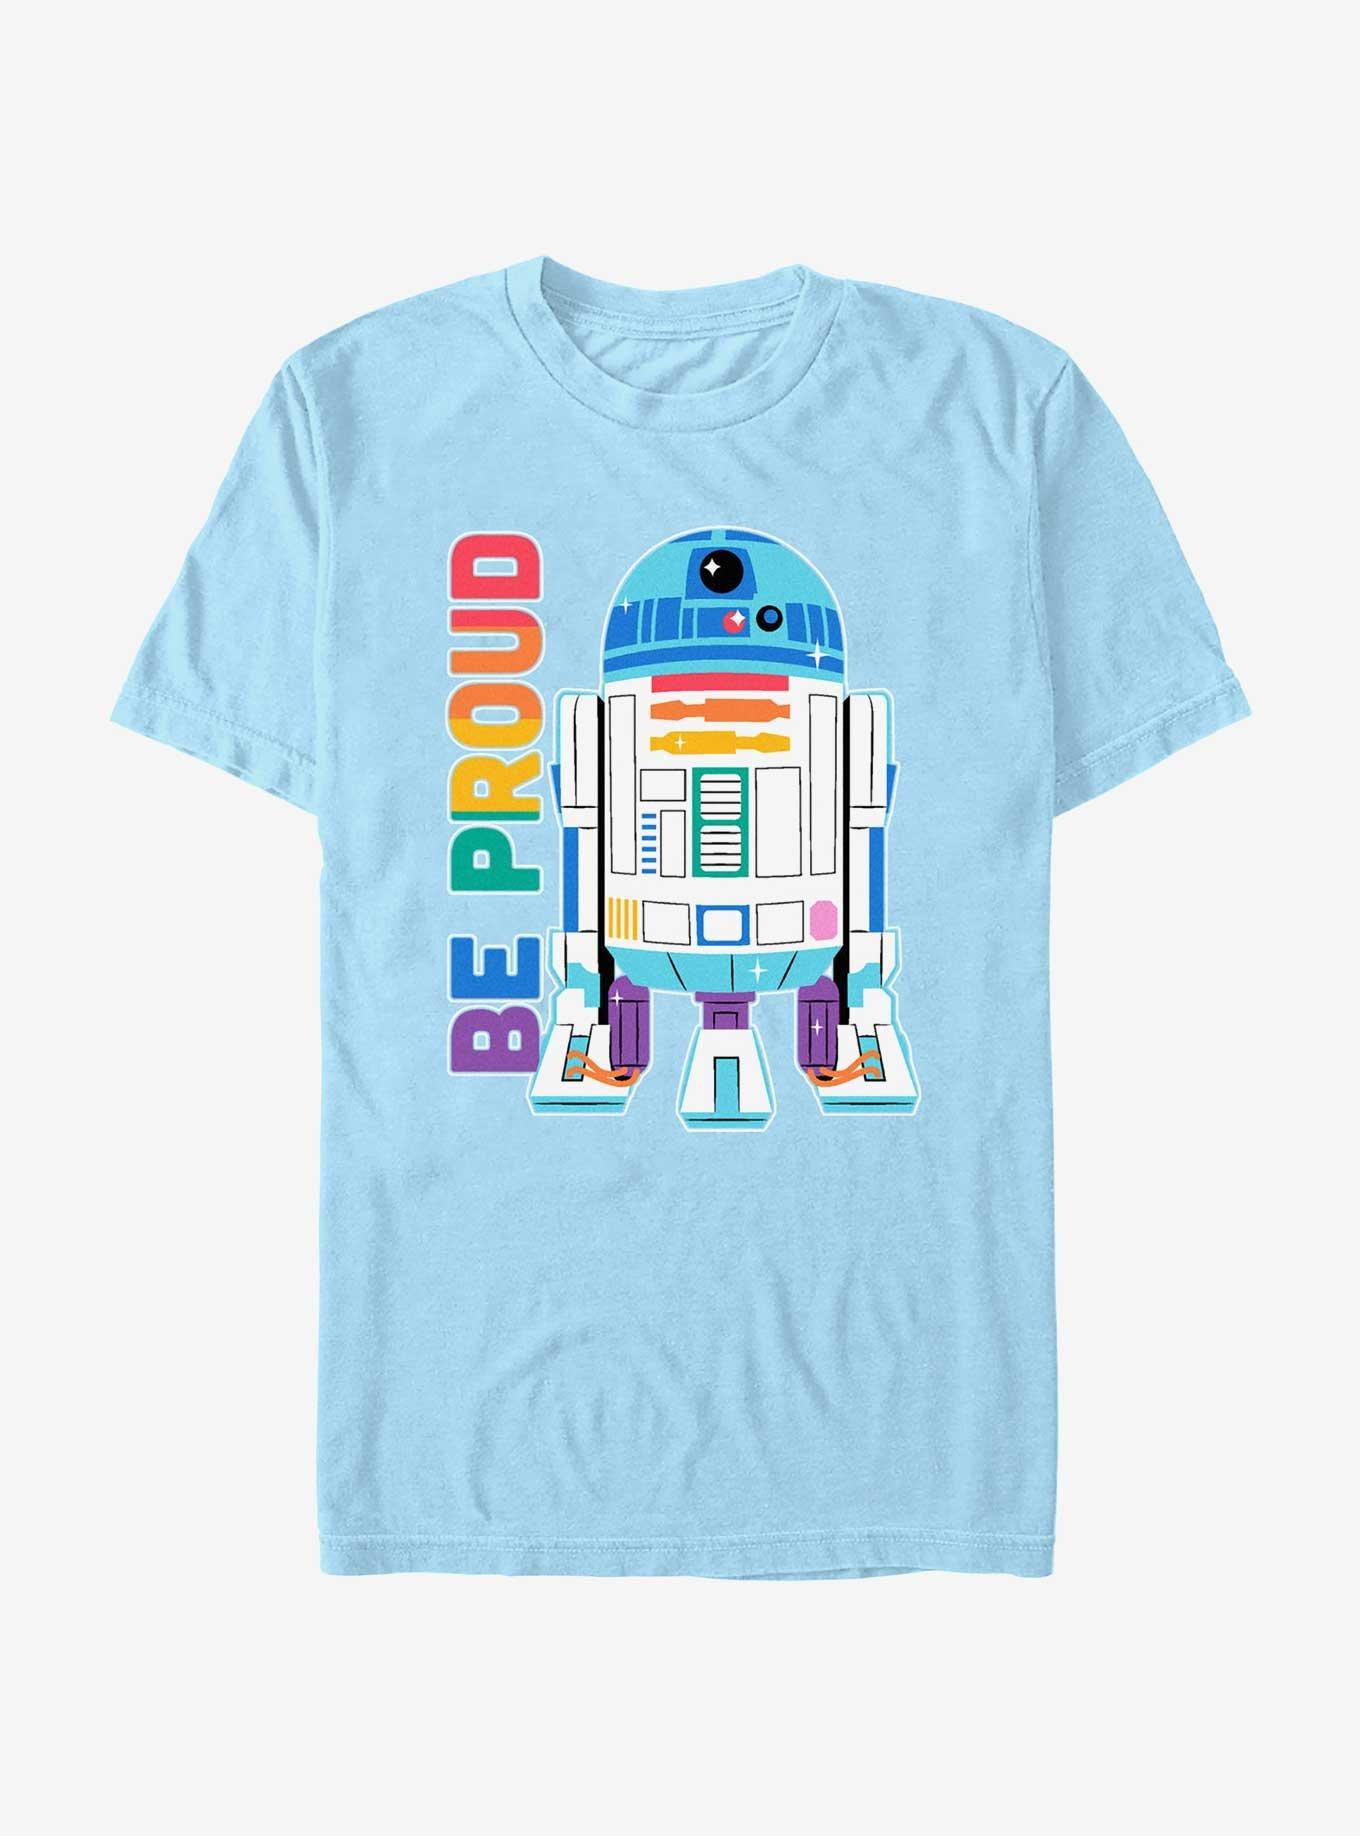 Star Wars R2D2 Be Proud Pride T-Shirt